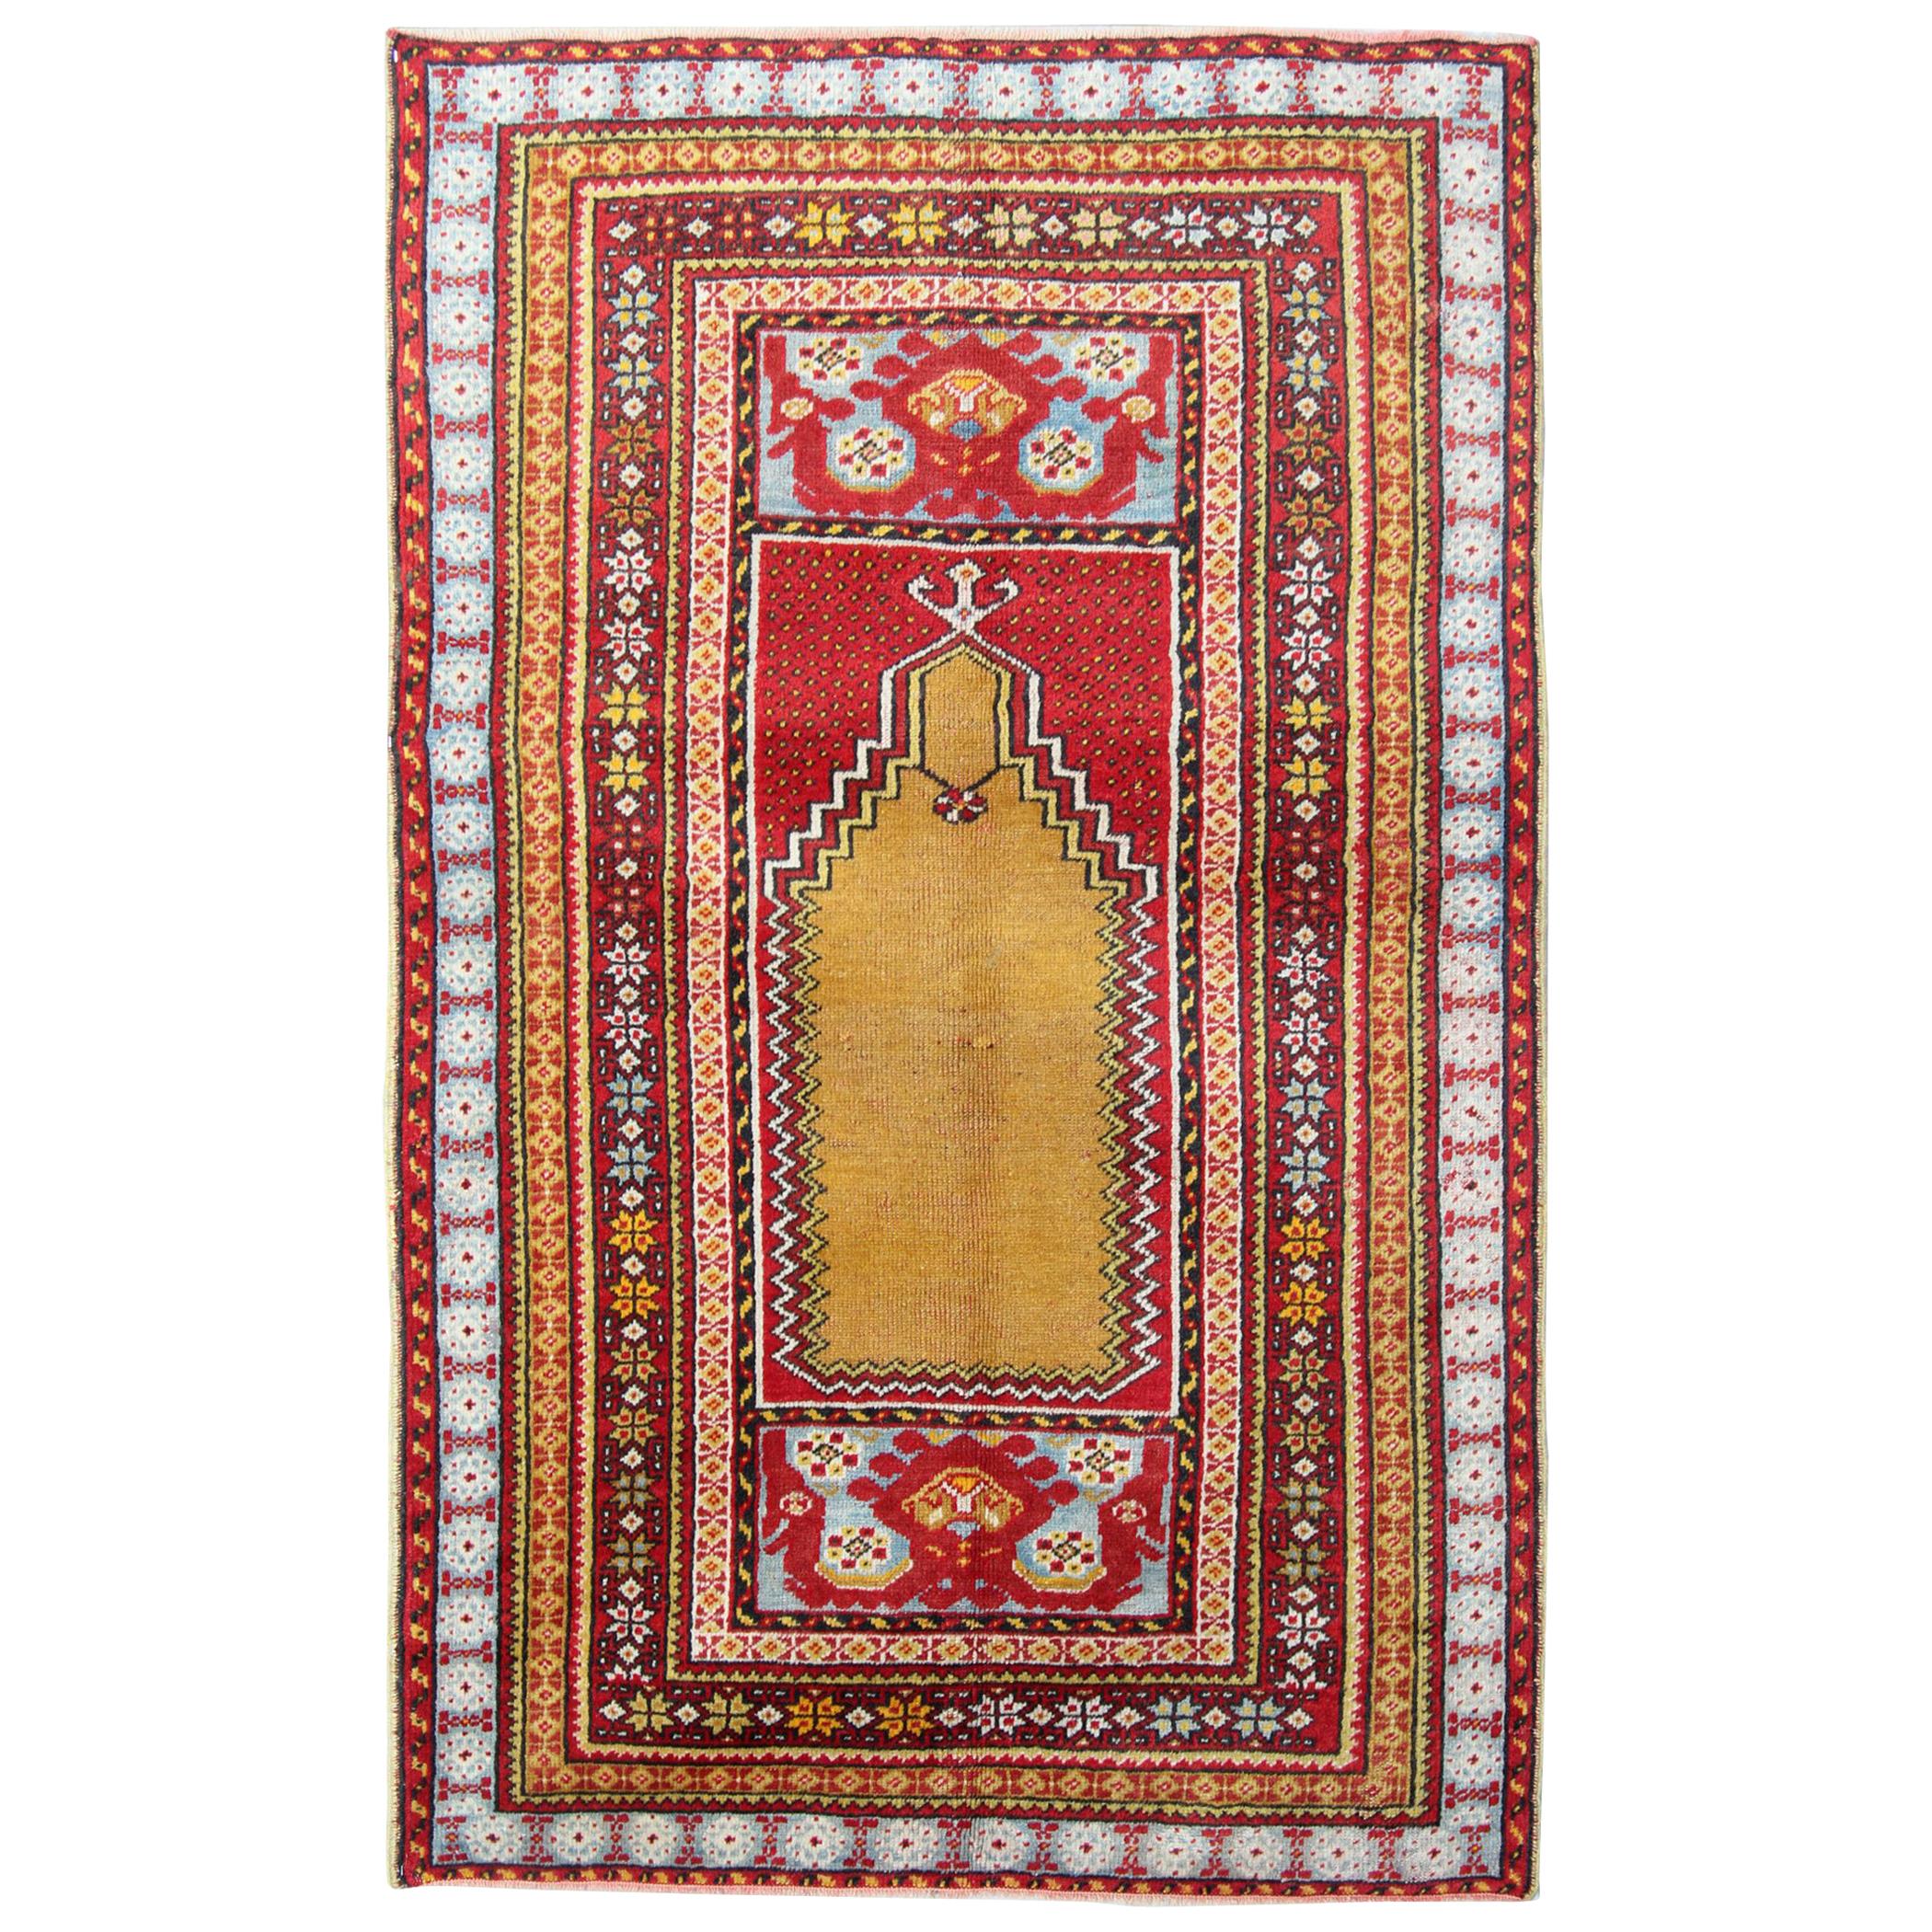 Antique Rugs Handmade Carpet, Turkish Rug, Living Room Rug for Sale Home Decor